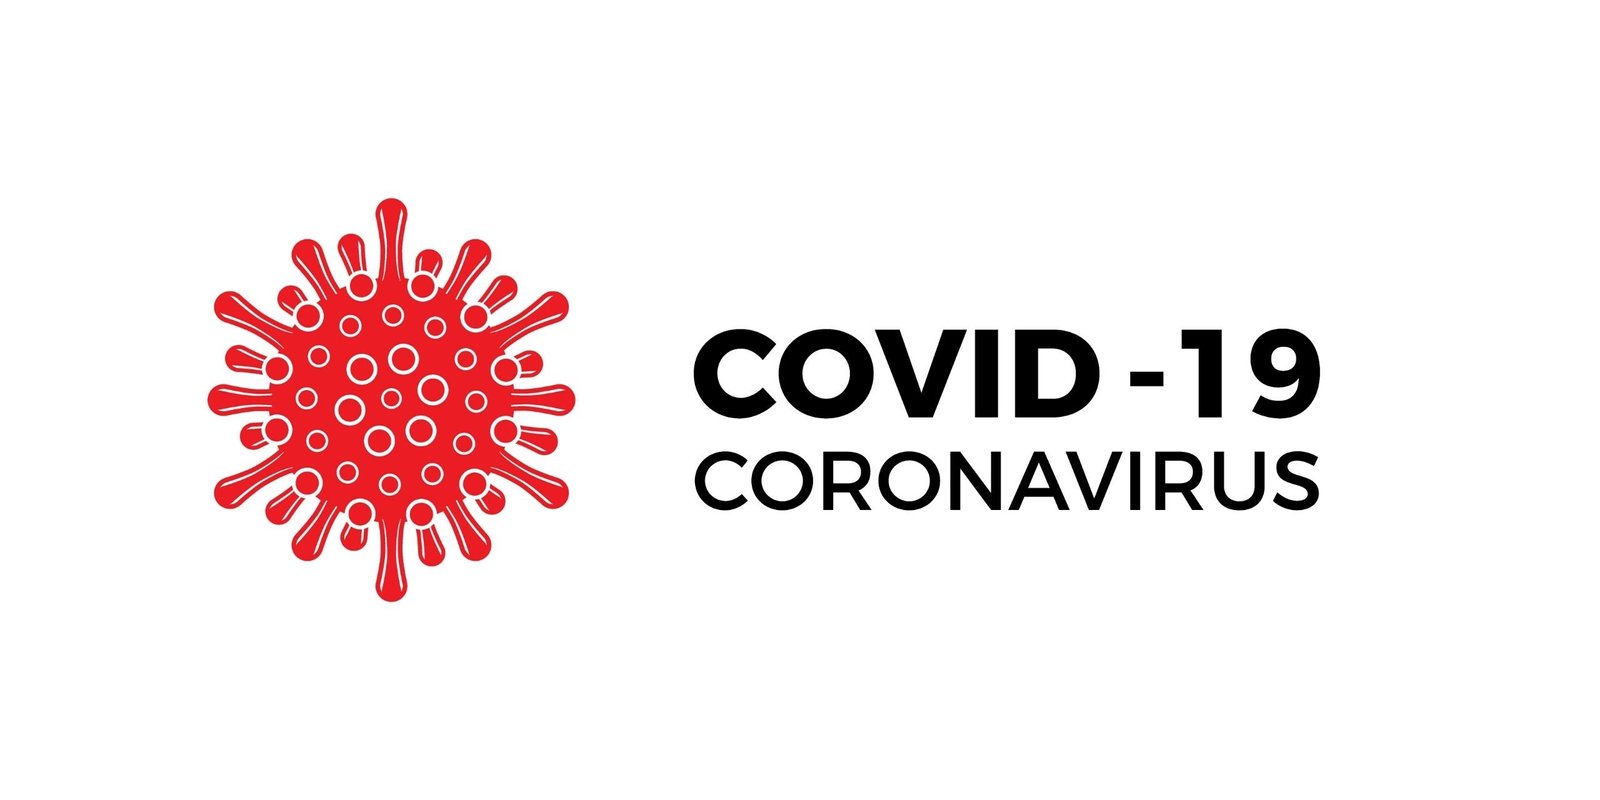 Button to buy Covid-19 specific vaccine course